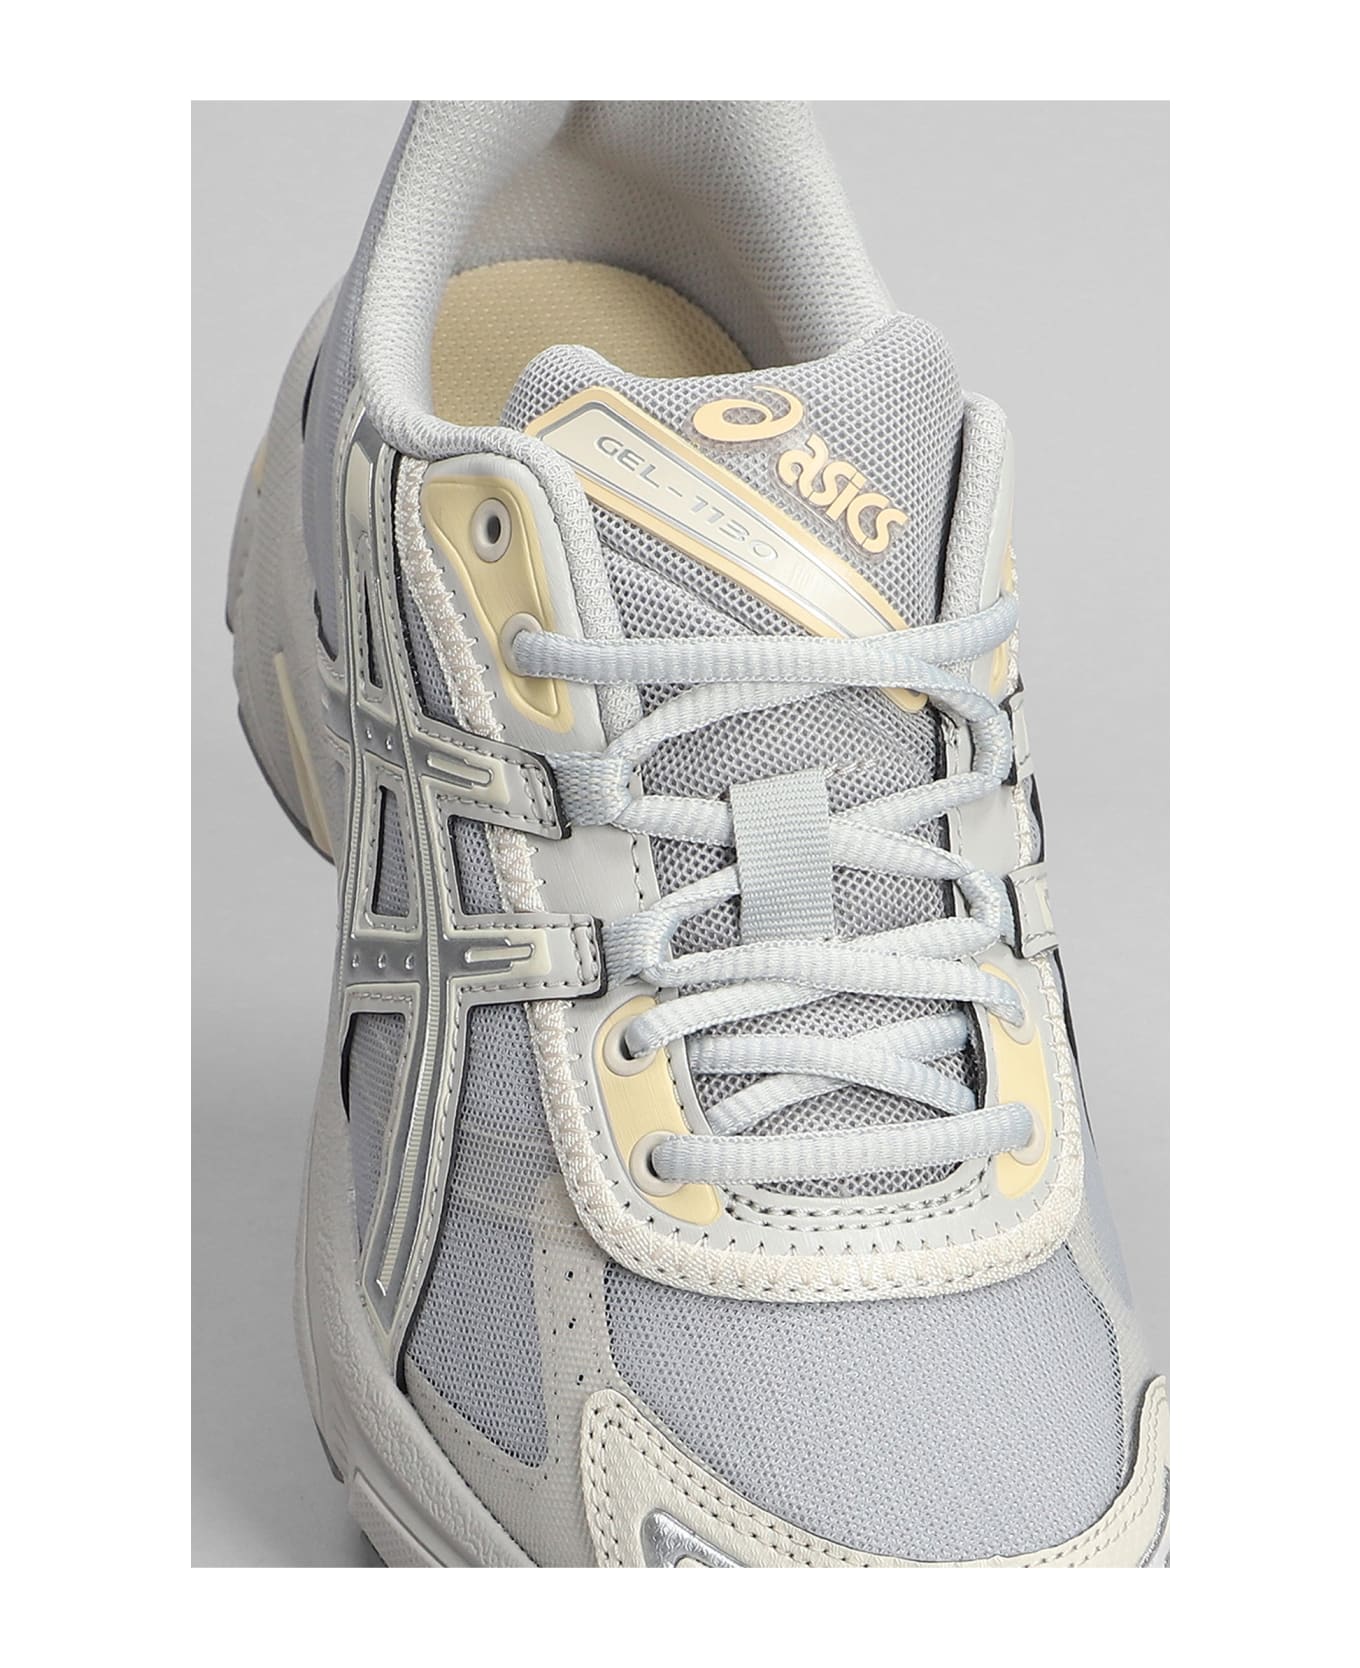 Asics Gel-1130 Re Sneakers In Grey Synthetic Fibers - grey スニーカー